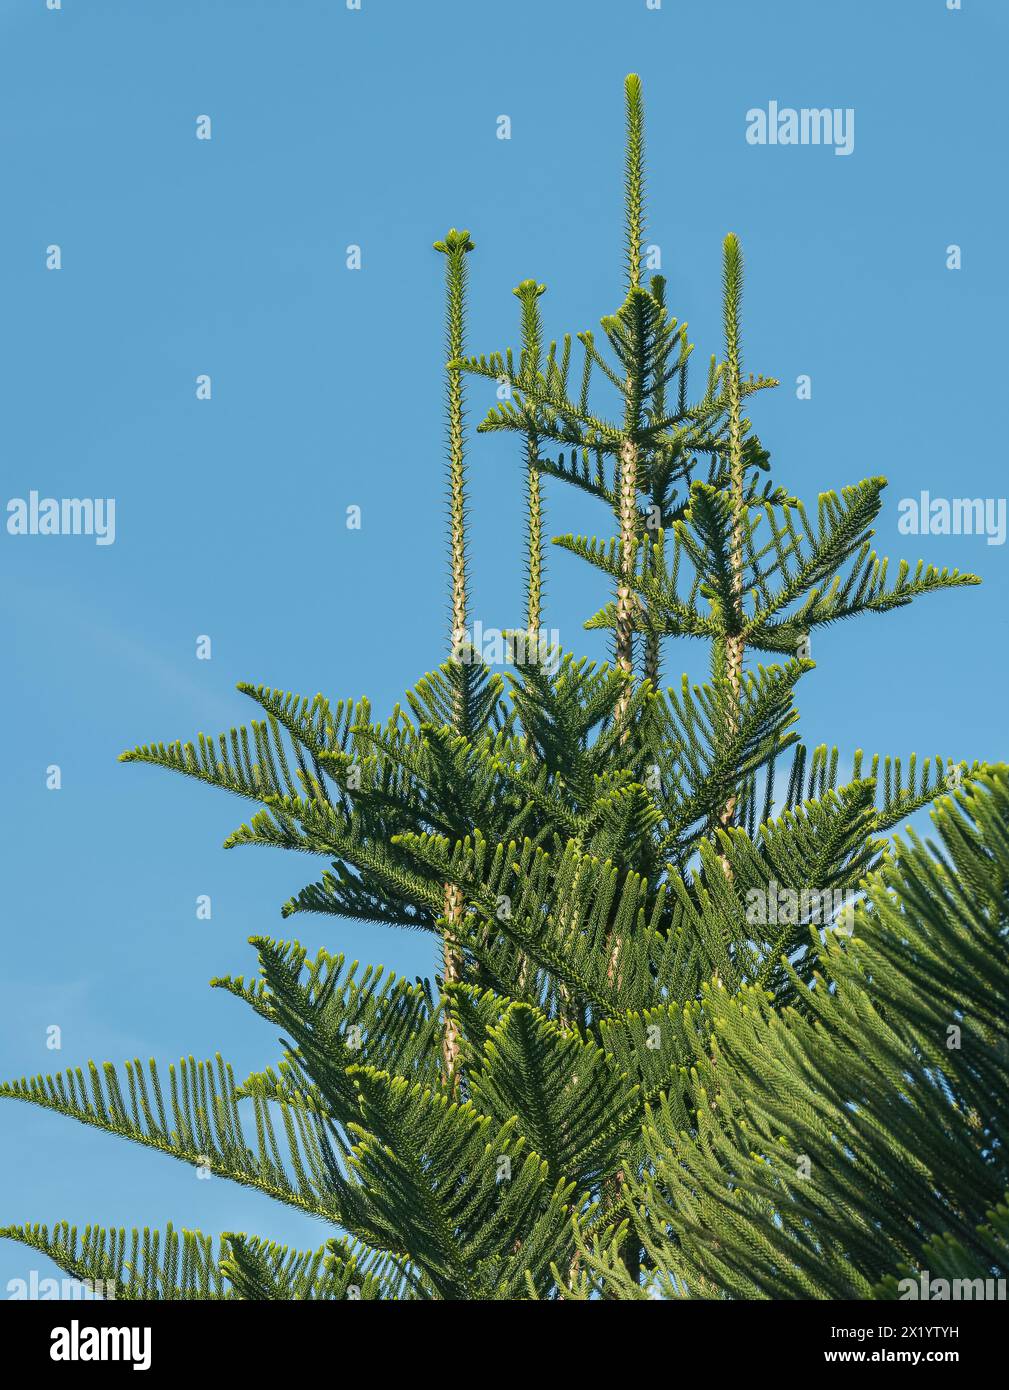 Norfolk pine tree reaching towards the blue sky in spring Stock Photo